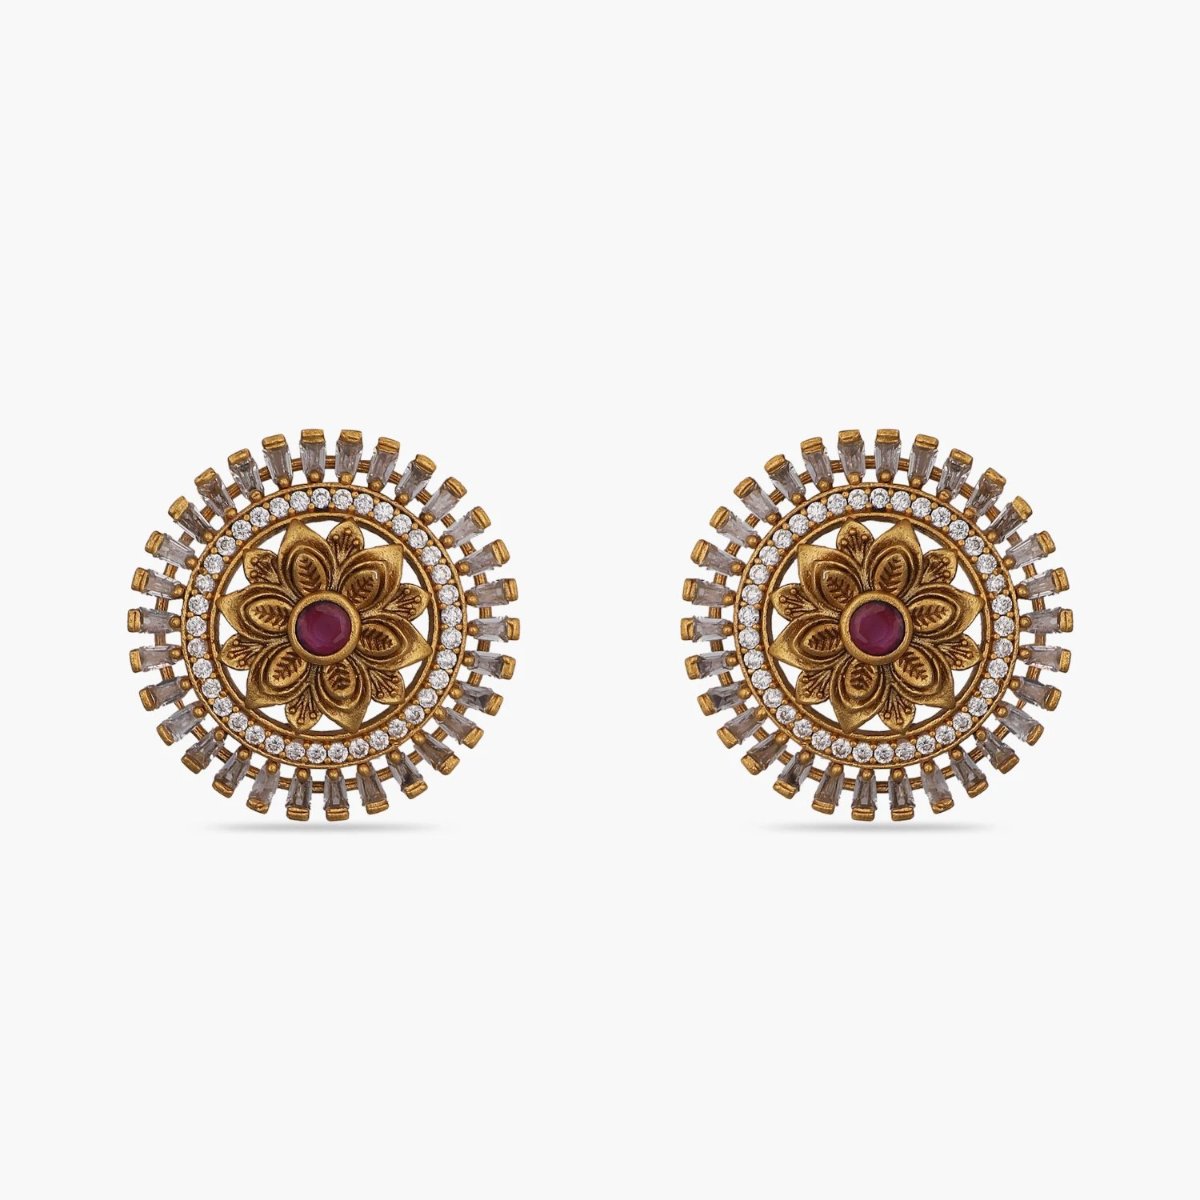 Indian Traditional Jewelry 22kt Yellow Gold Kudi Design Stud Earrings | eBay